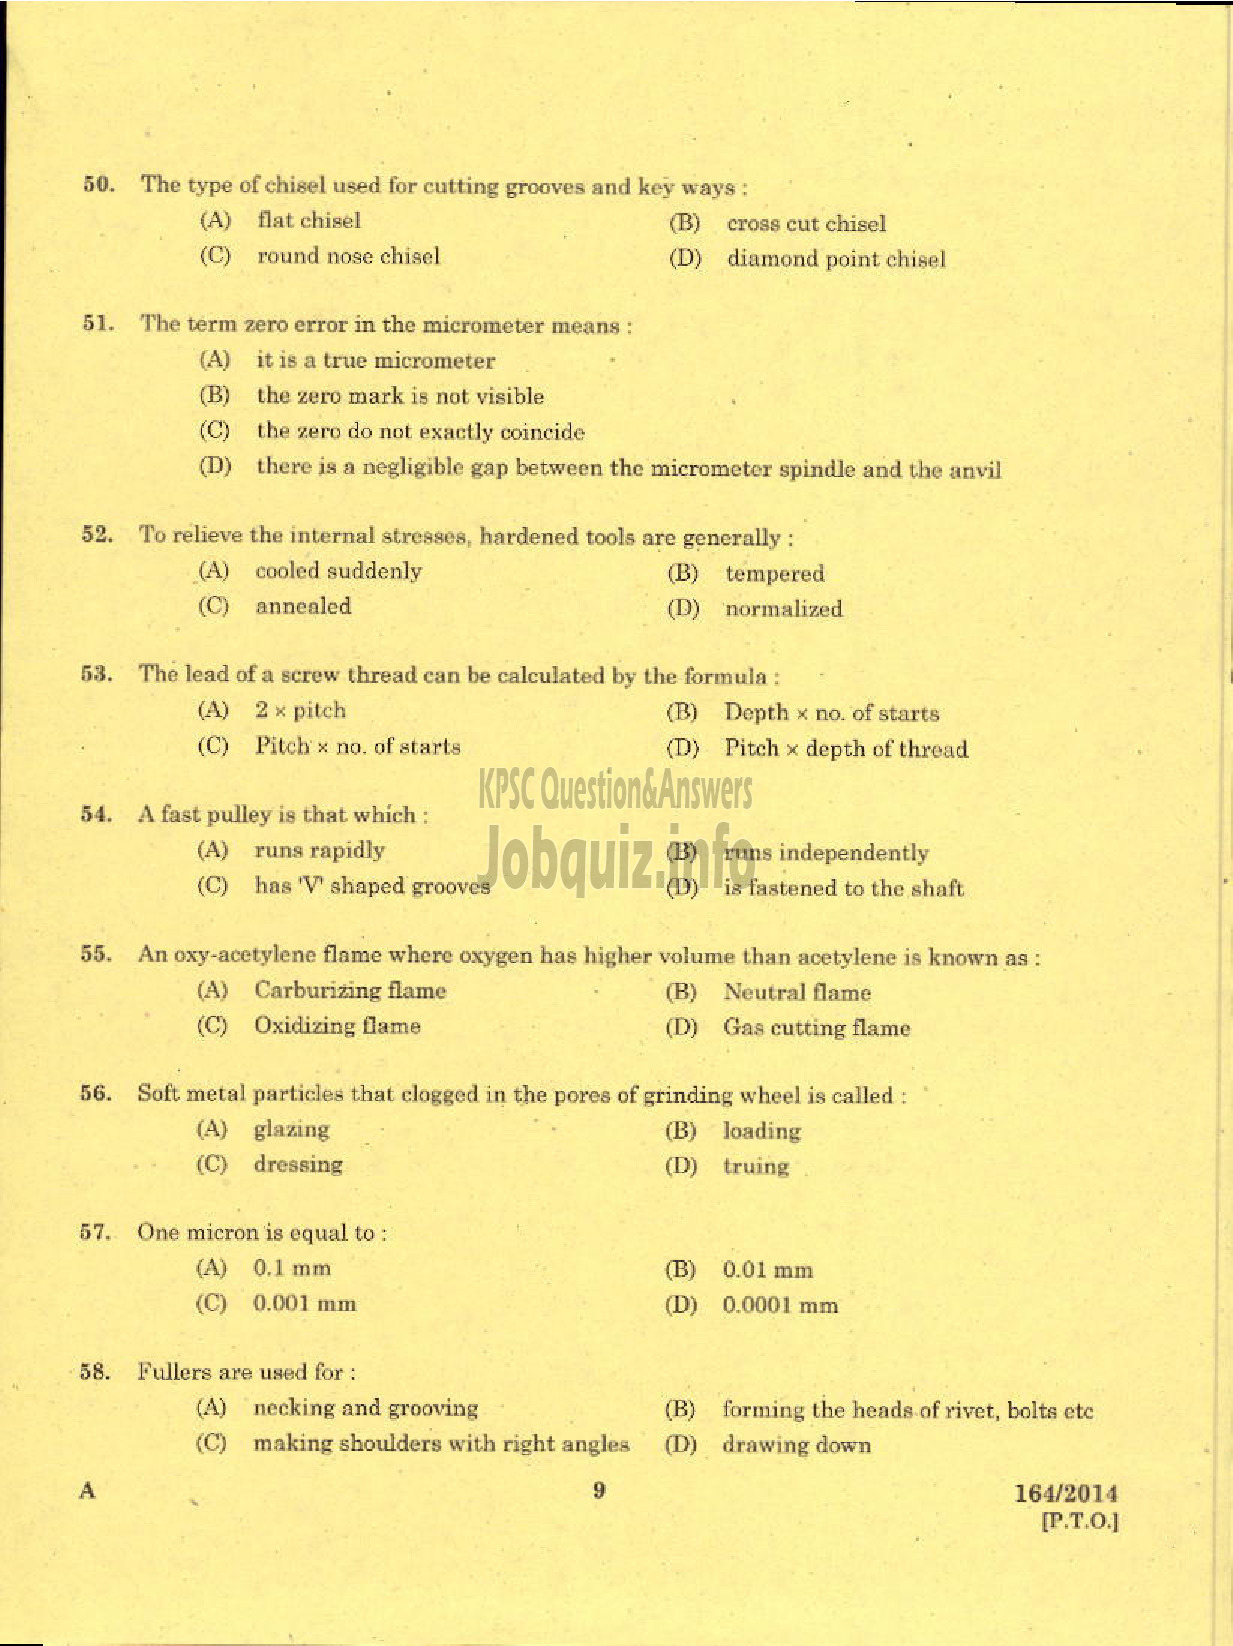 Kerala PSC Question Paper - TRADESMAN FITTING TECHNICAL EDUCATION-7